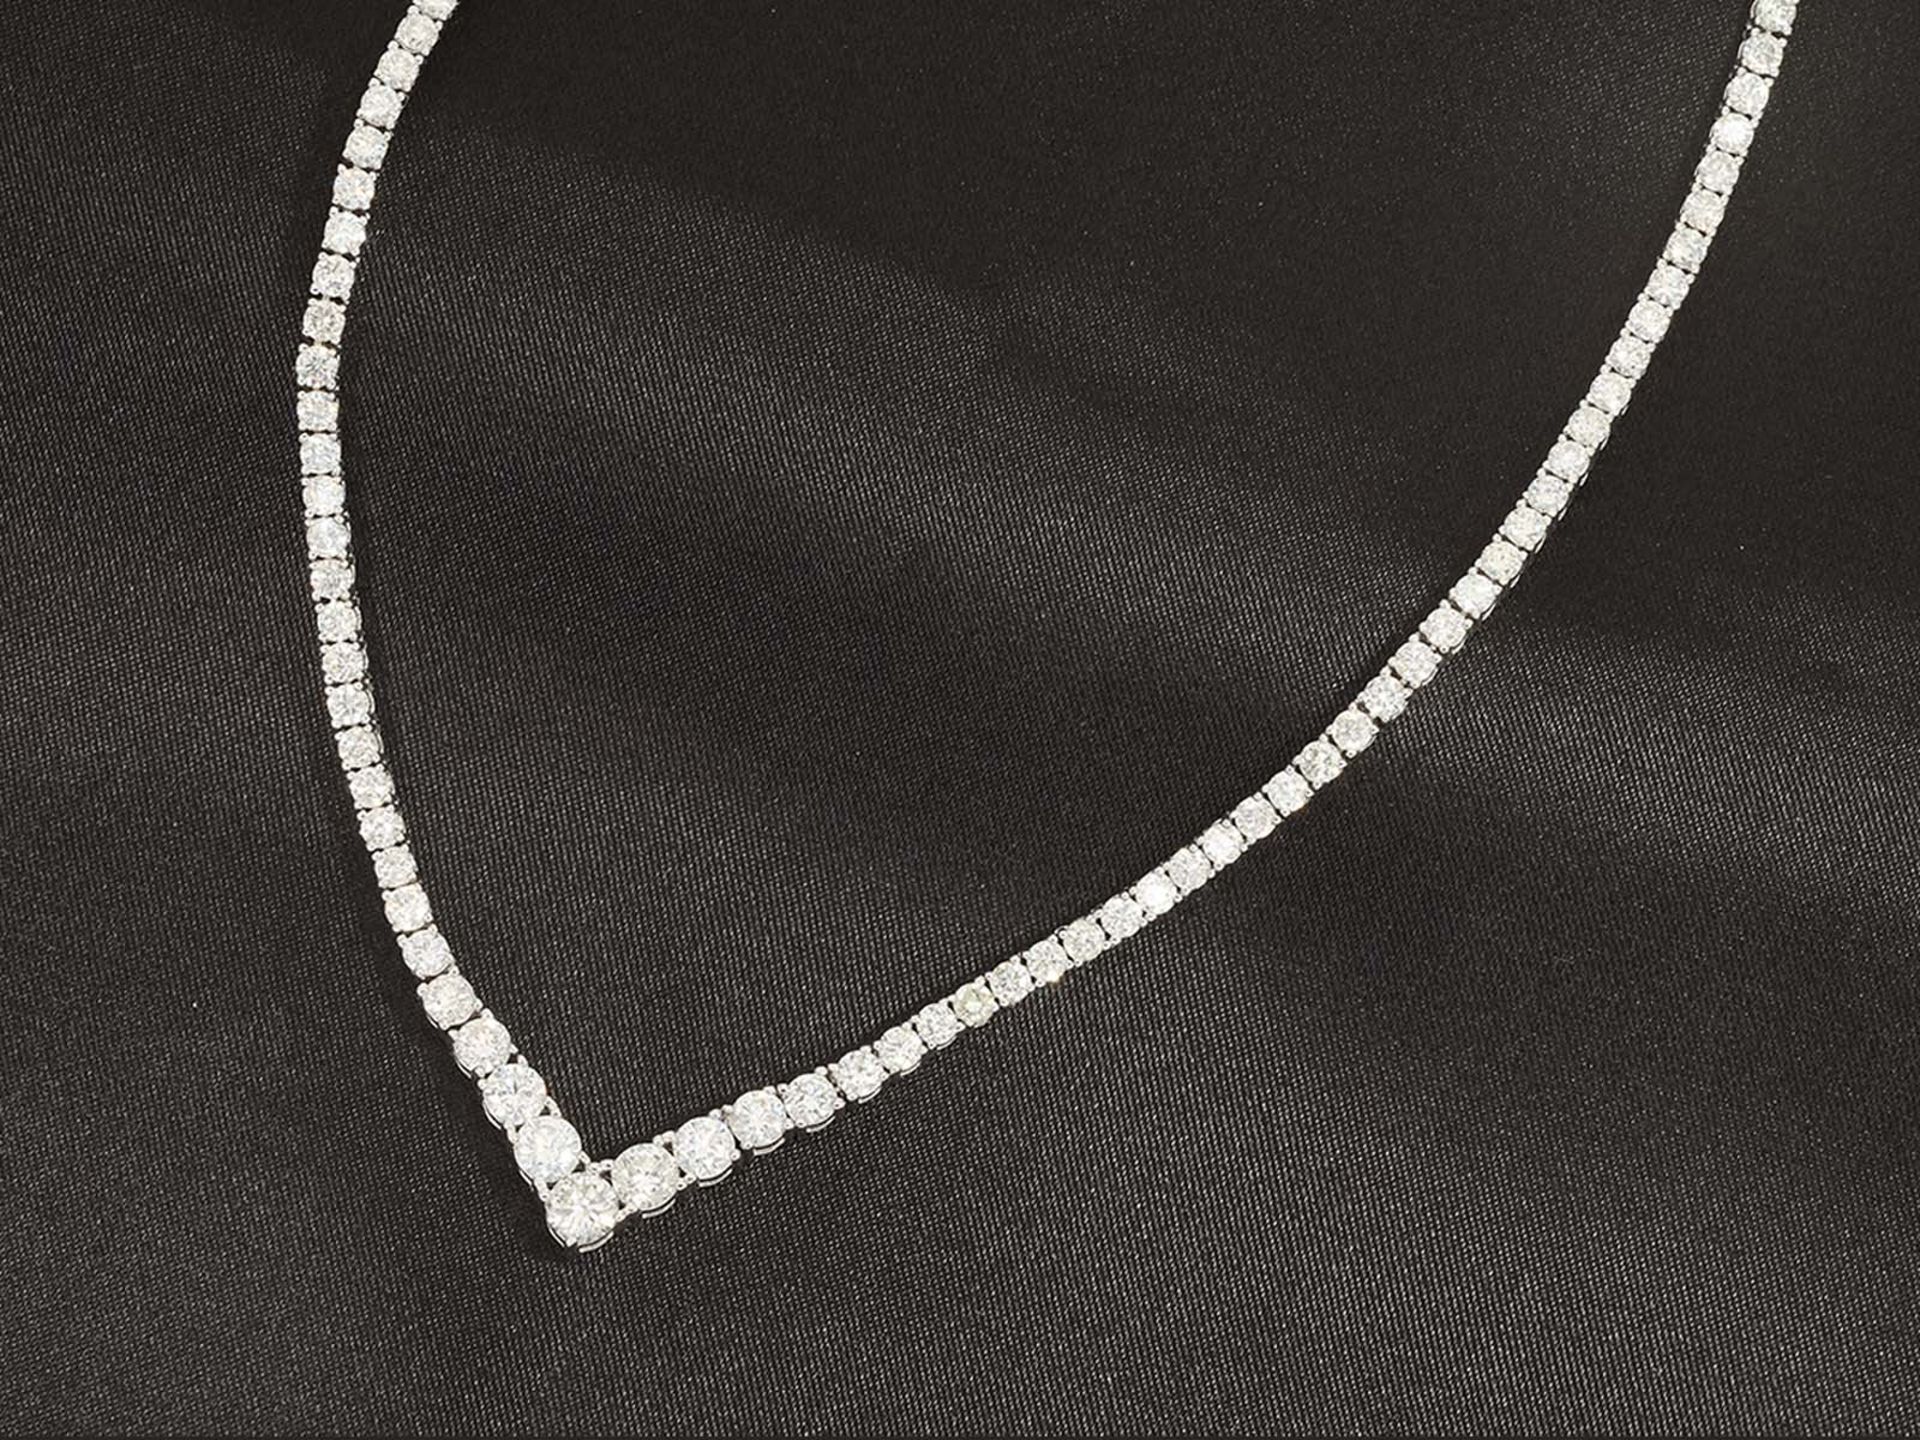 Chain: very fine brilliant-cut diamond necklace, approx. 9.3ct, like new